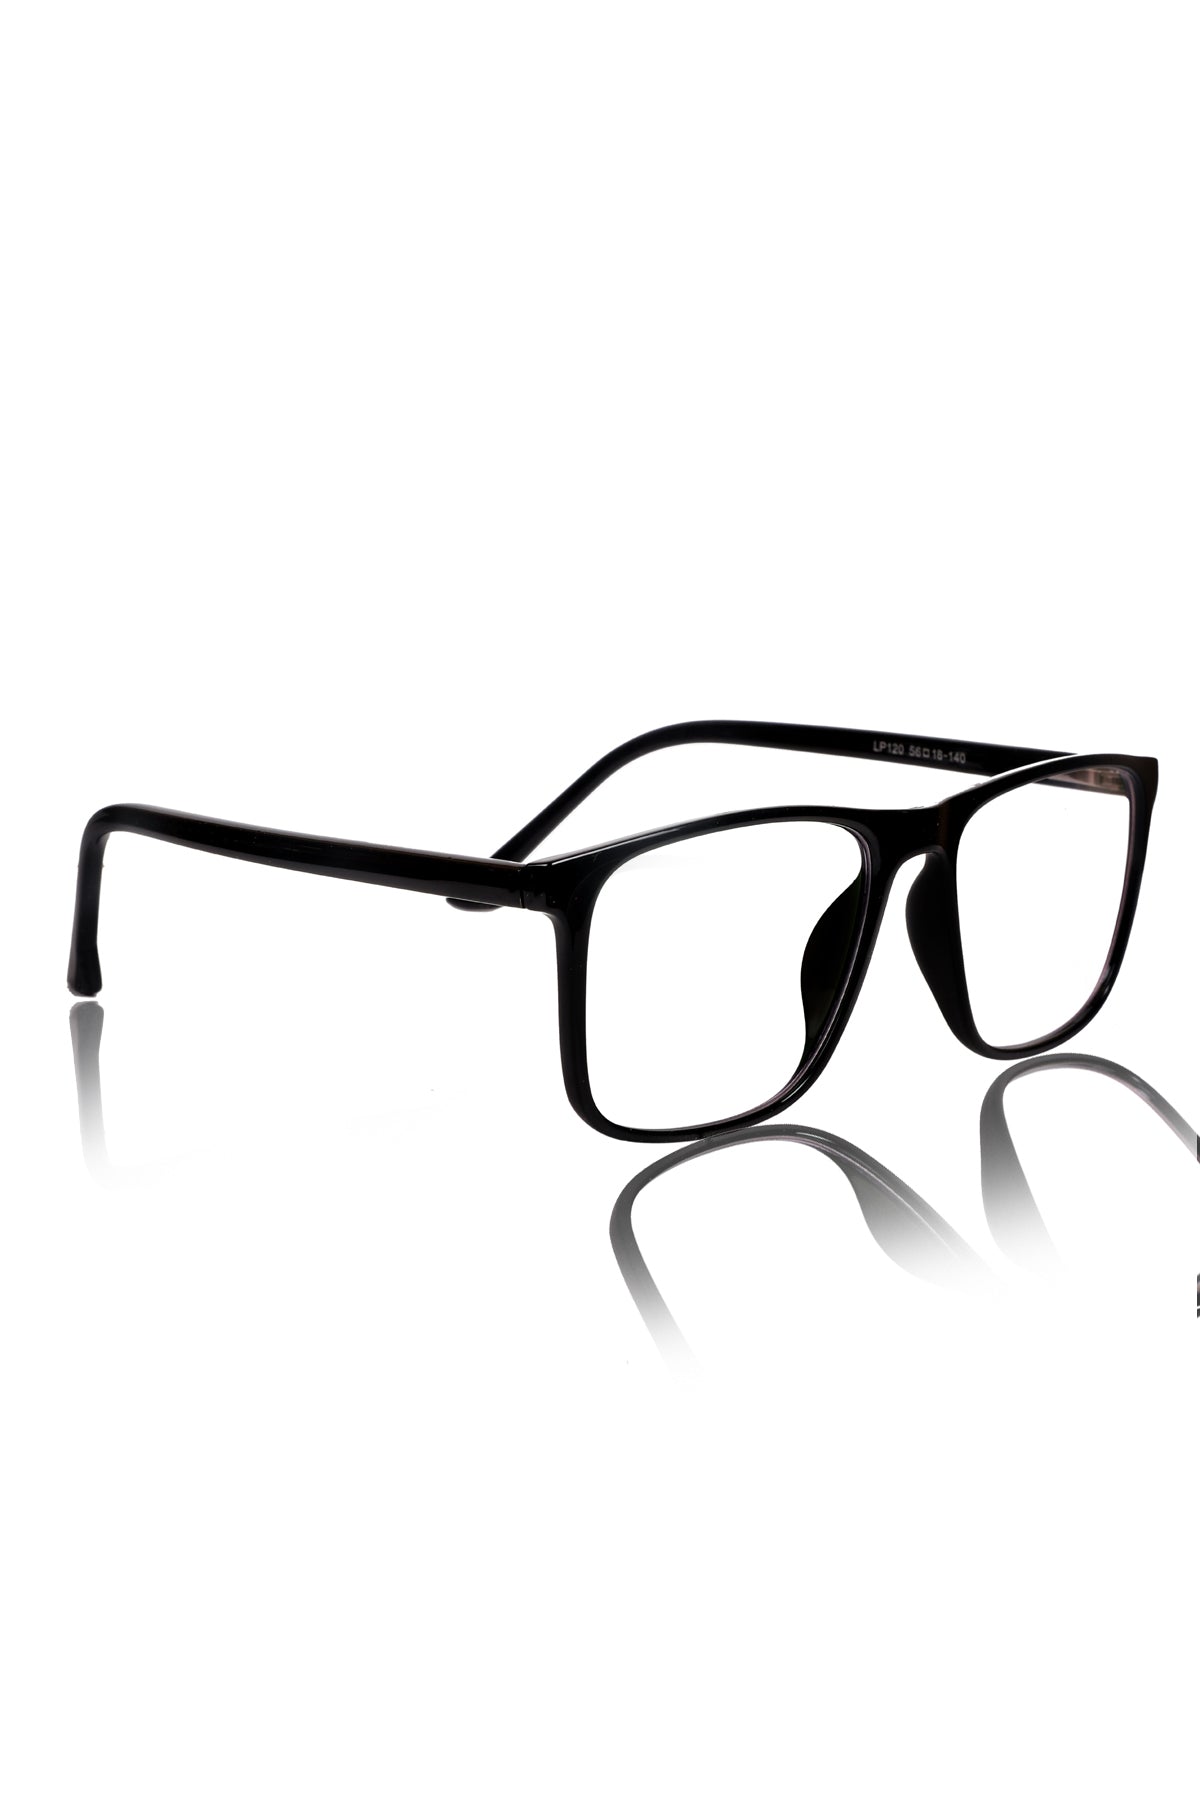 Jodykoes® Premium Series Pure Acetate Sheet Rectangle Eyewear Frame | Modern Fashionable Trending Spectacle Eyeglasses For Men and Women (Opaque Black) - Jodykoes ®